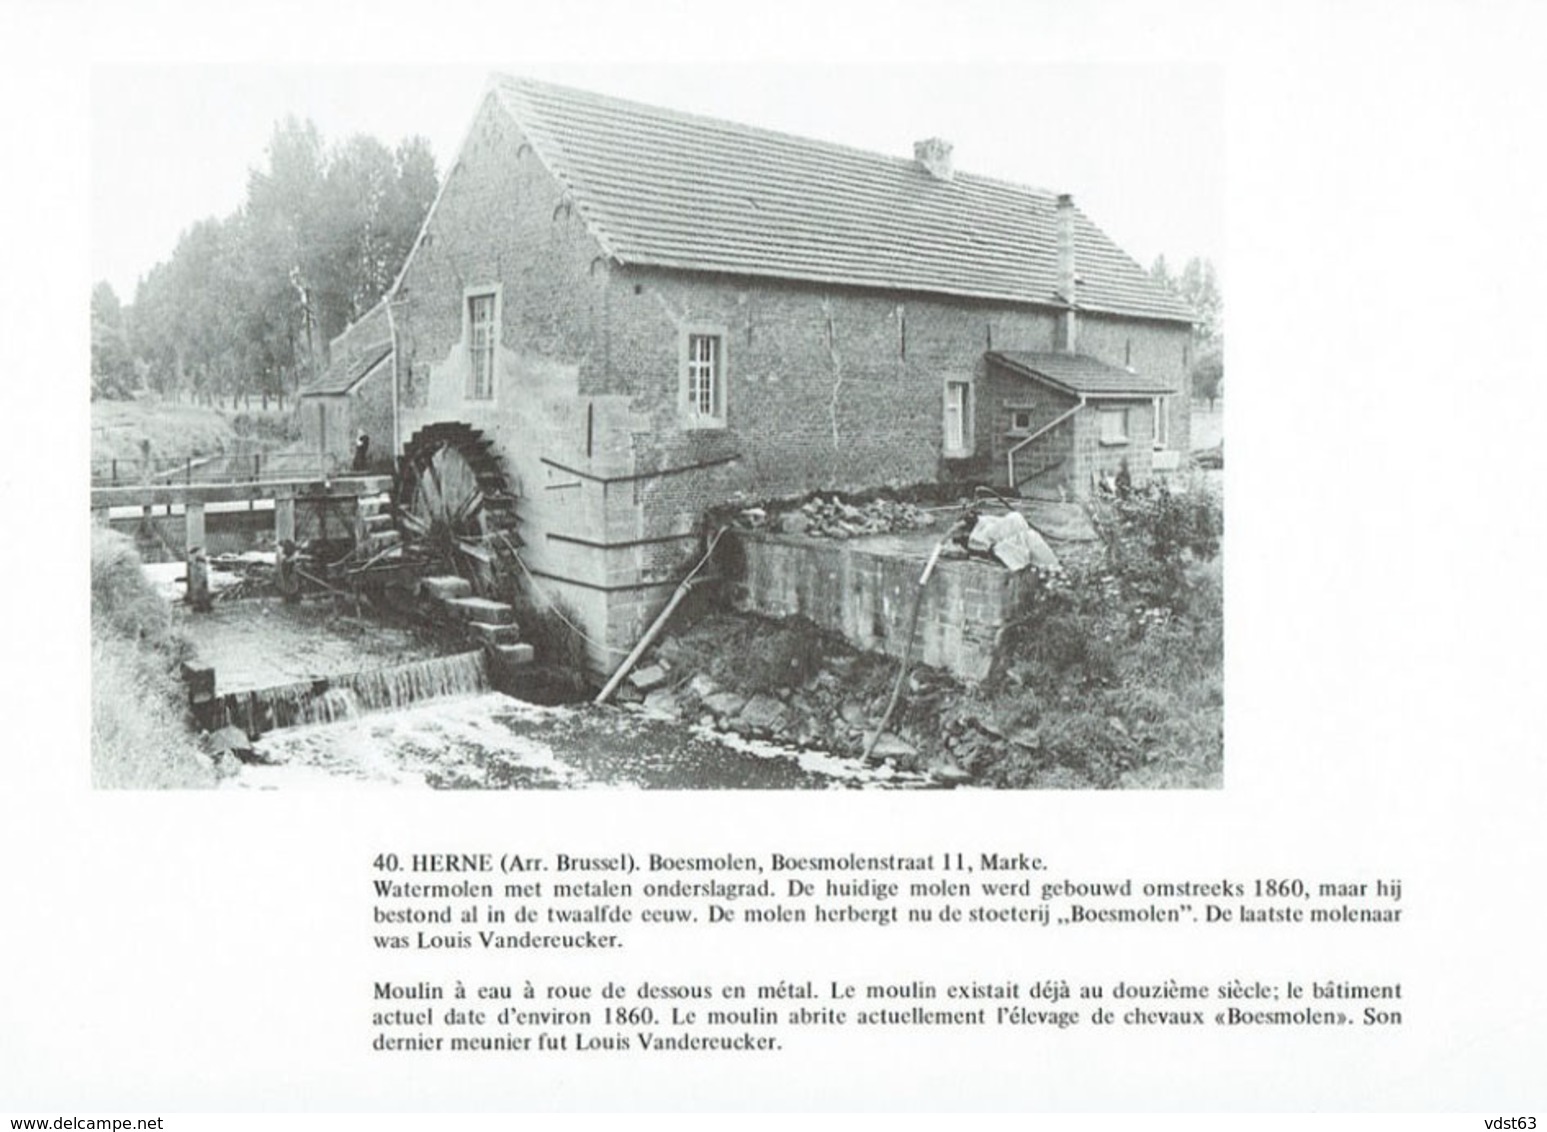 Livre Boek BRABANTSE WATERMOLENS In Beeld MOULINS A EAU BRABANCONS En Images - Zaltbommel 1978 - Brabant Moulin Molen - Boeken & Catalogi